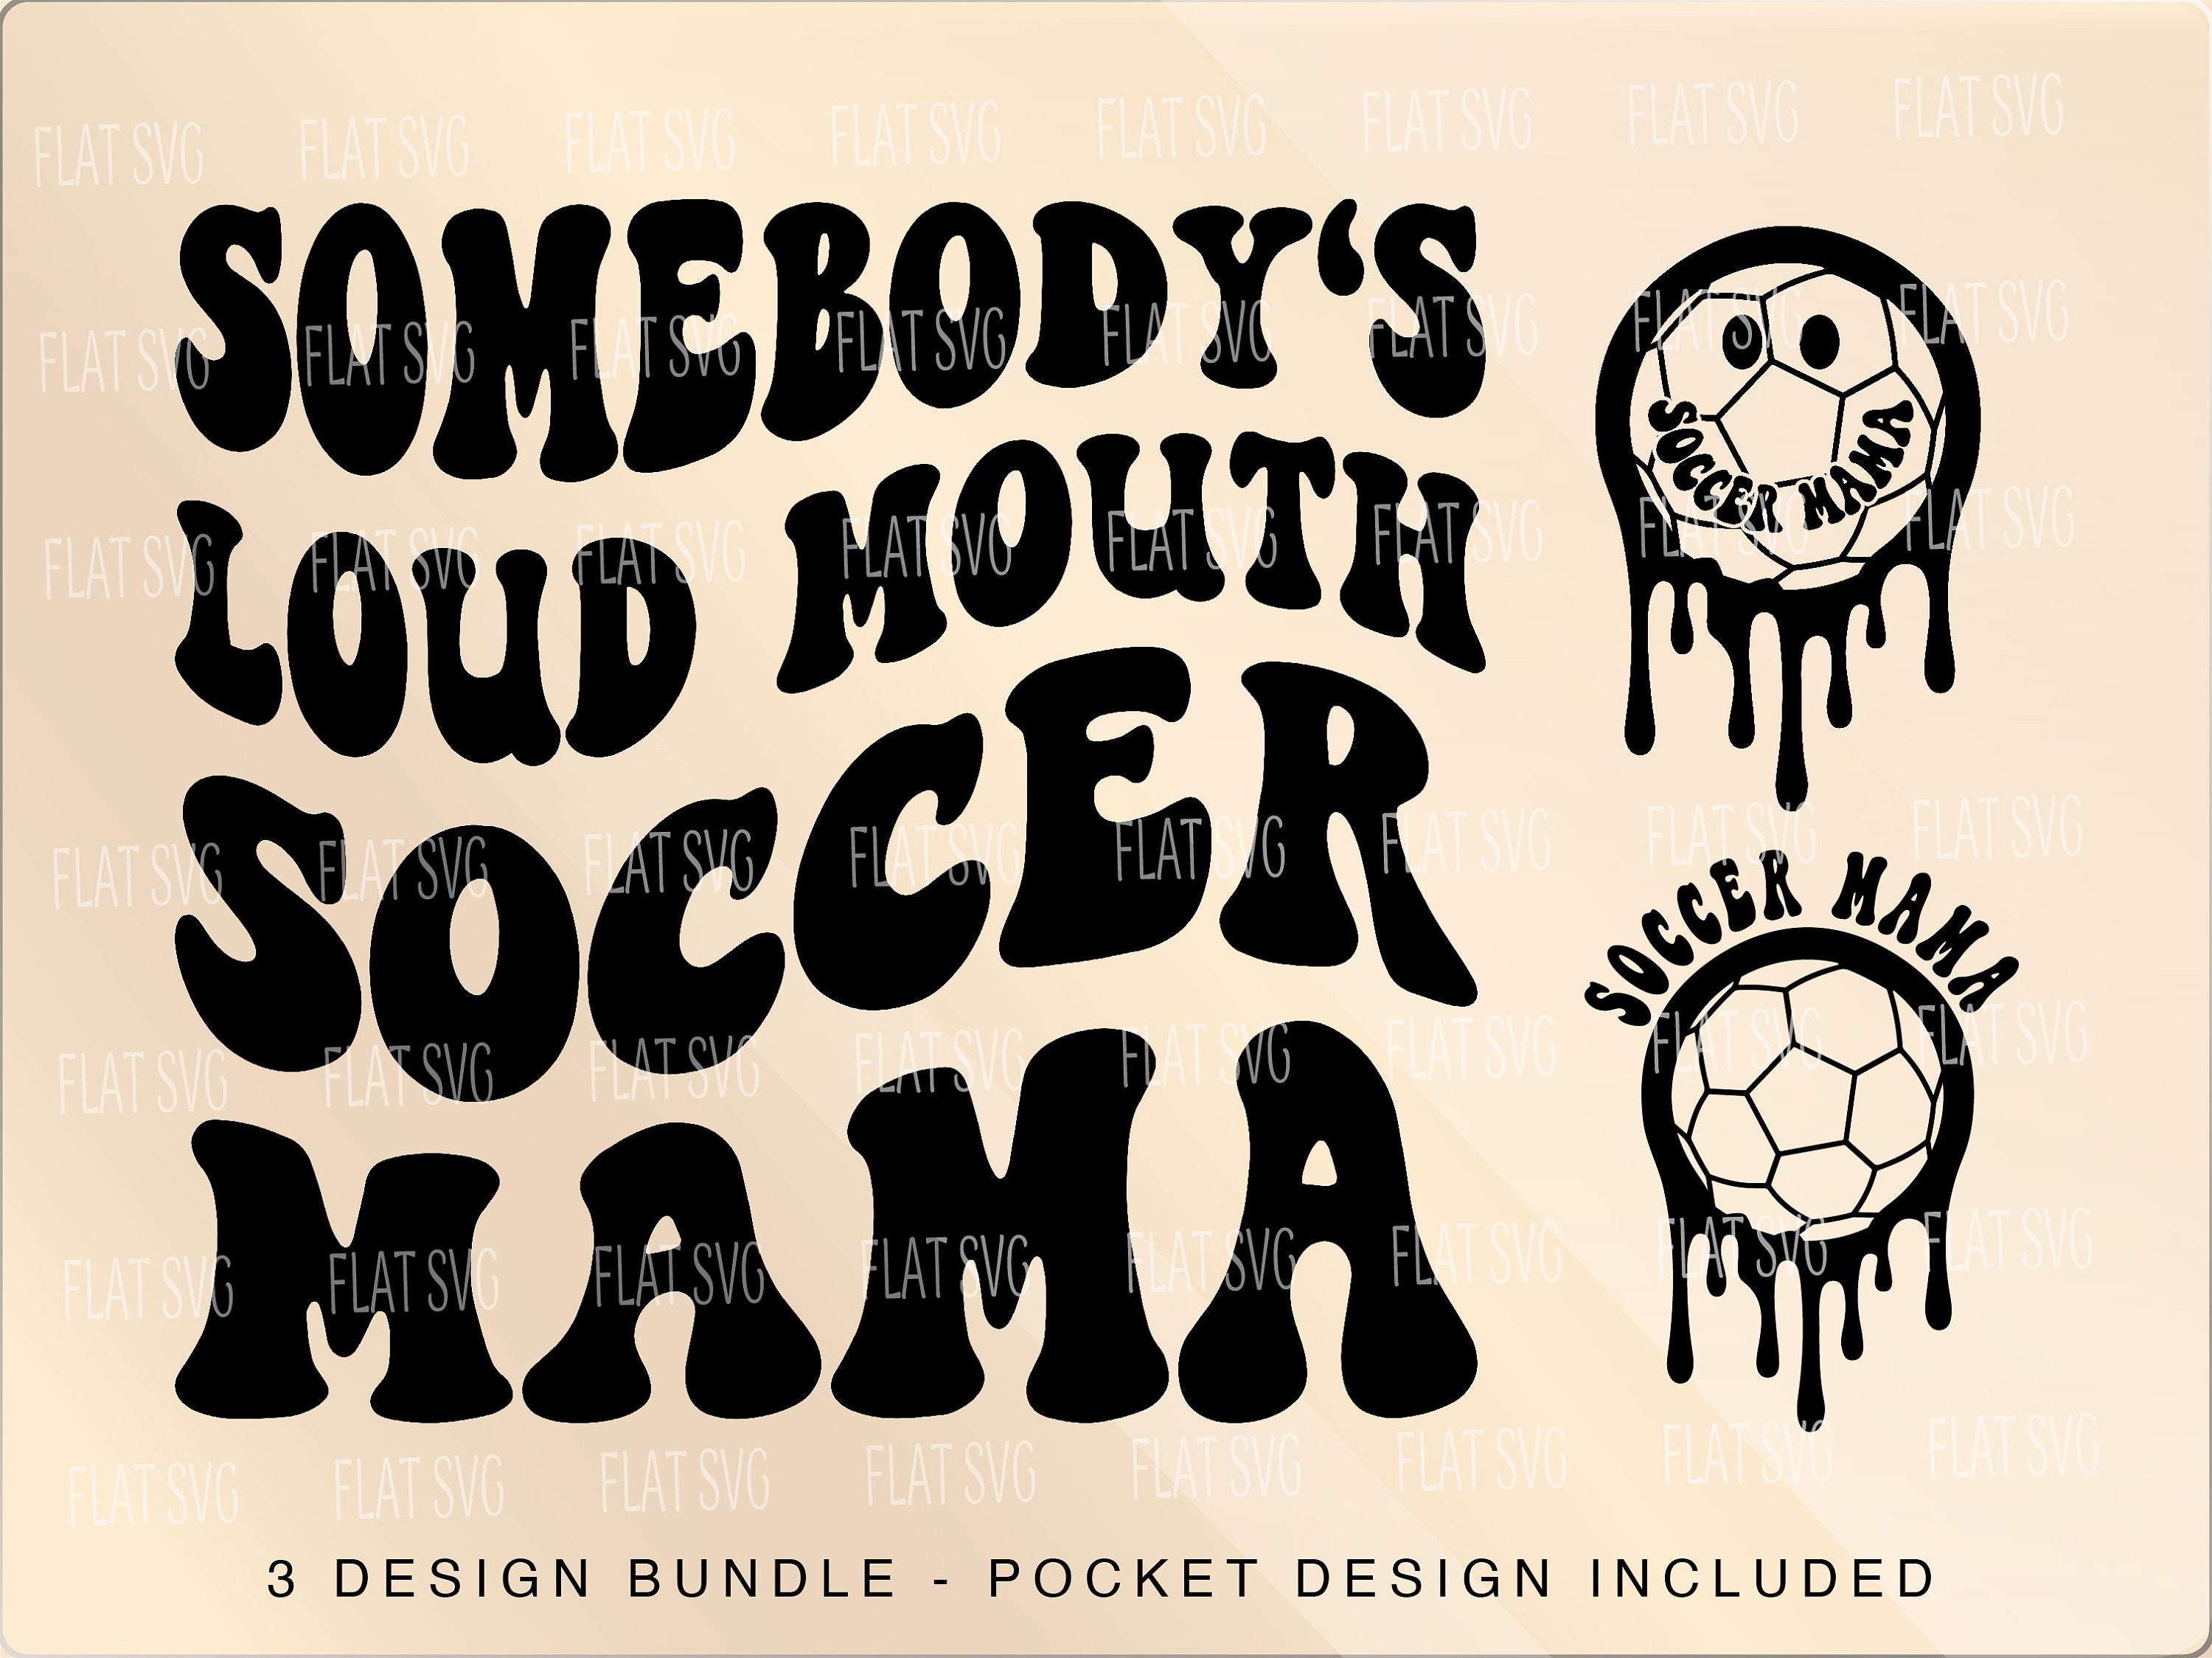 Somebody's Loud Mouth Soccer Mom 20 oz Tumbler